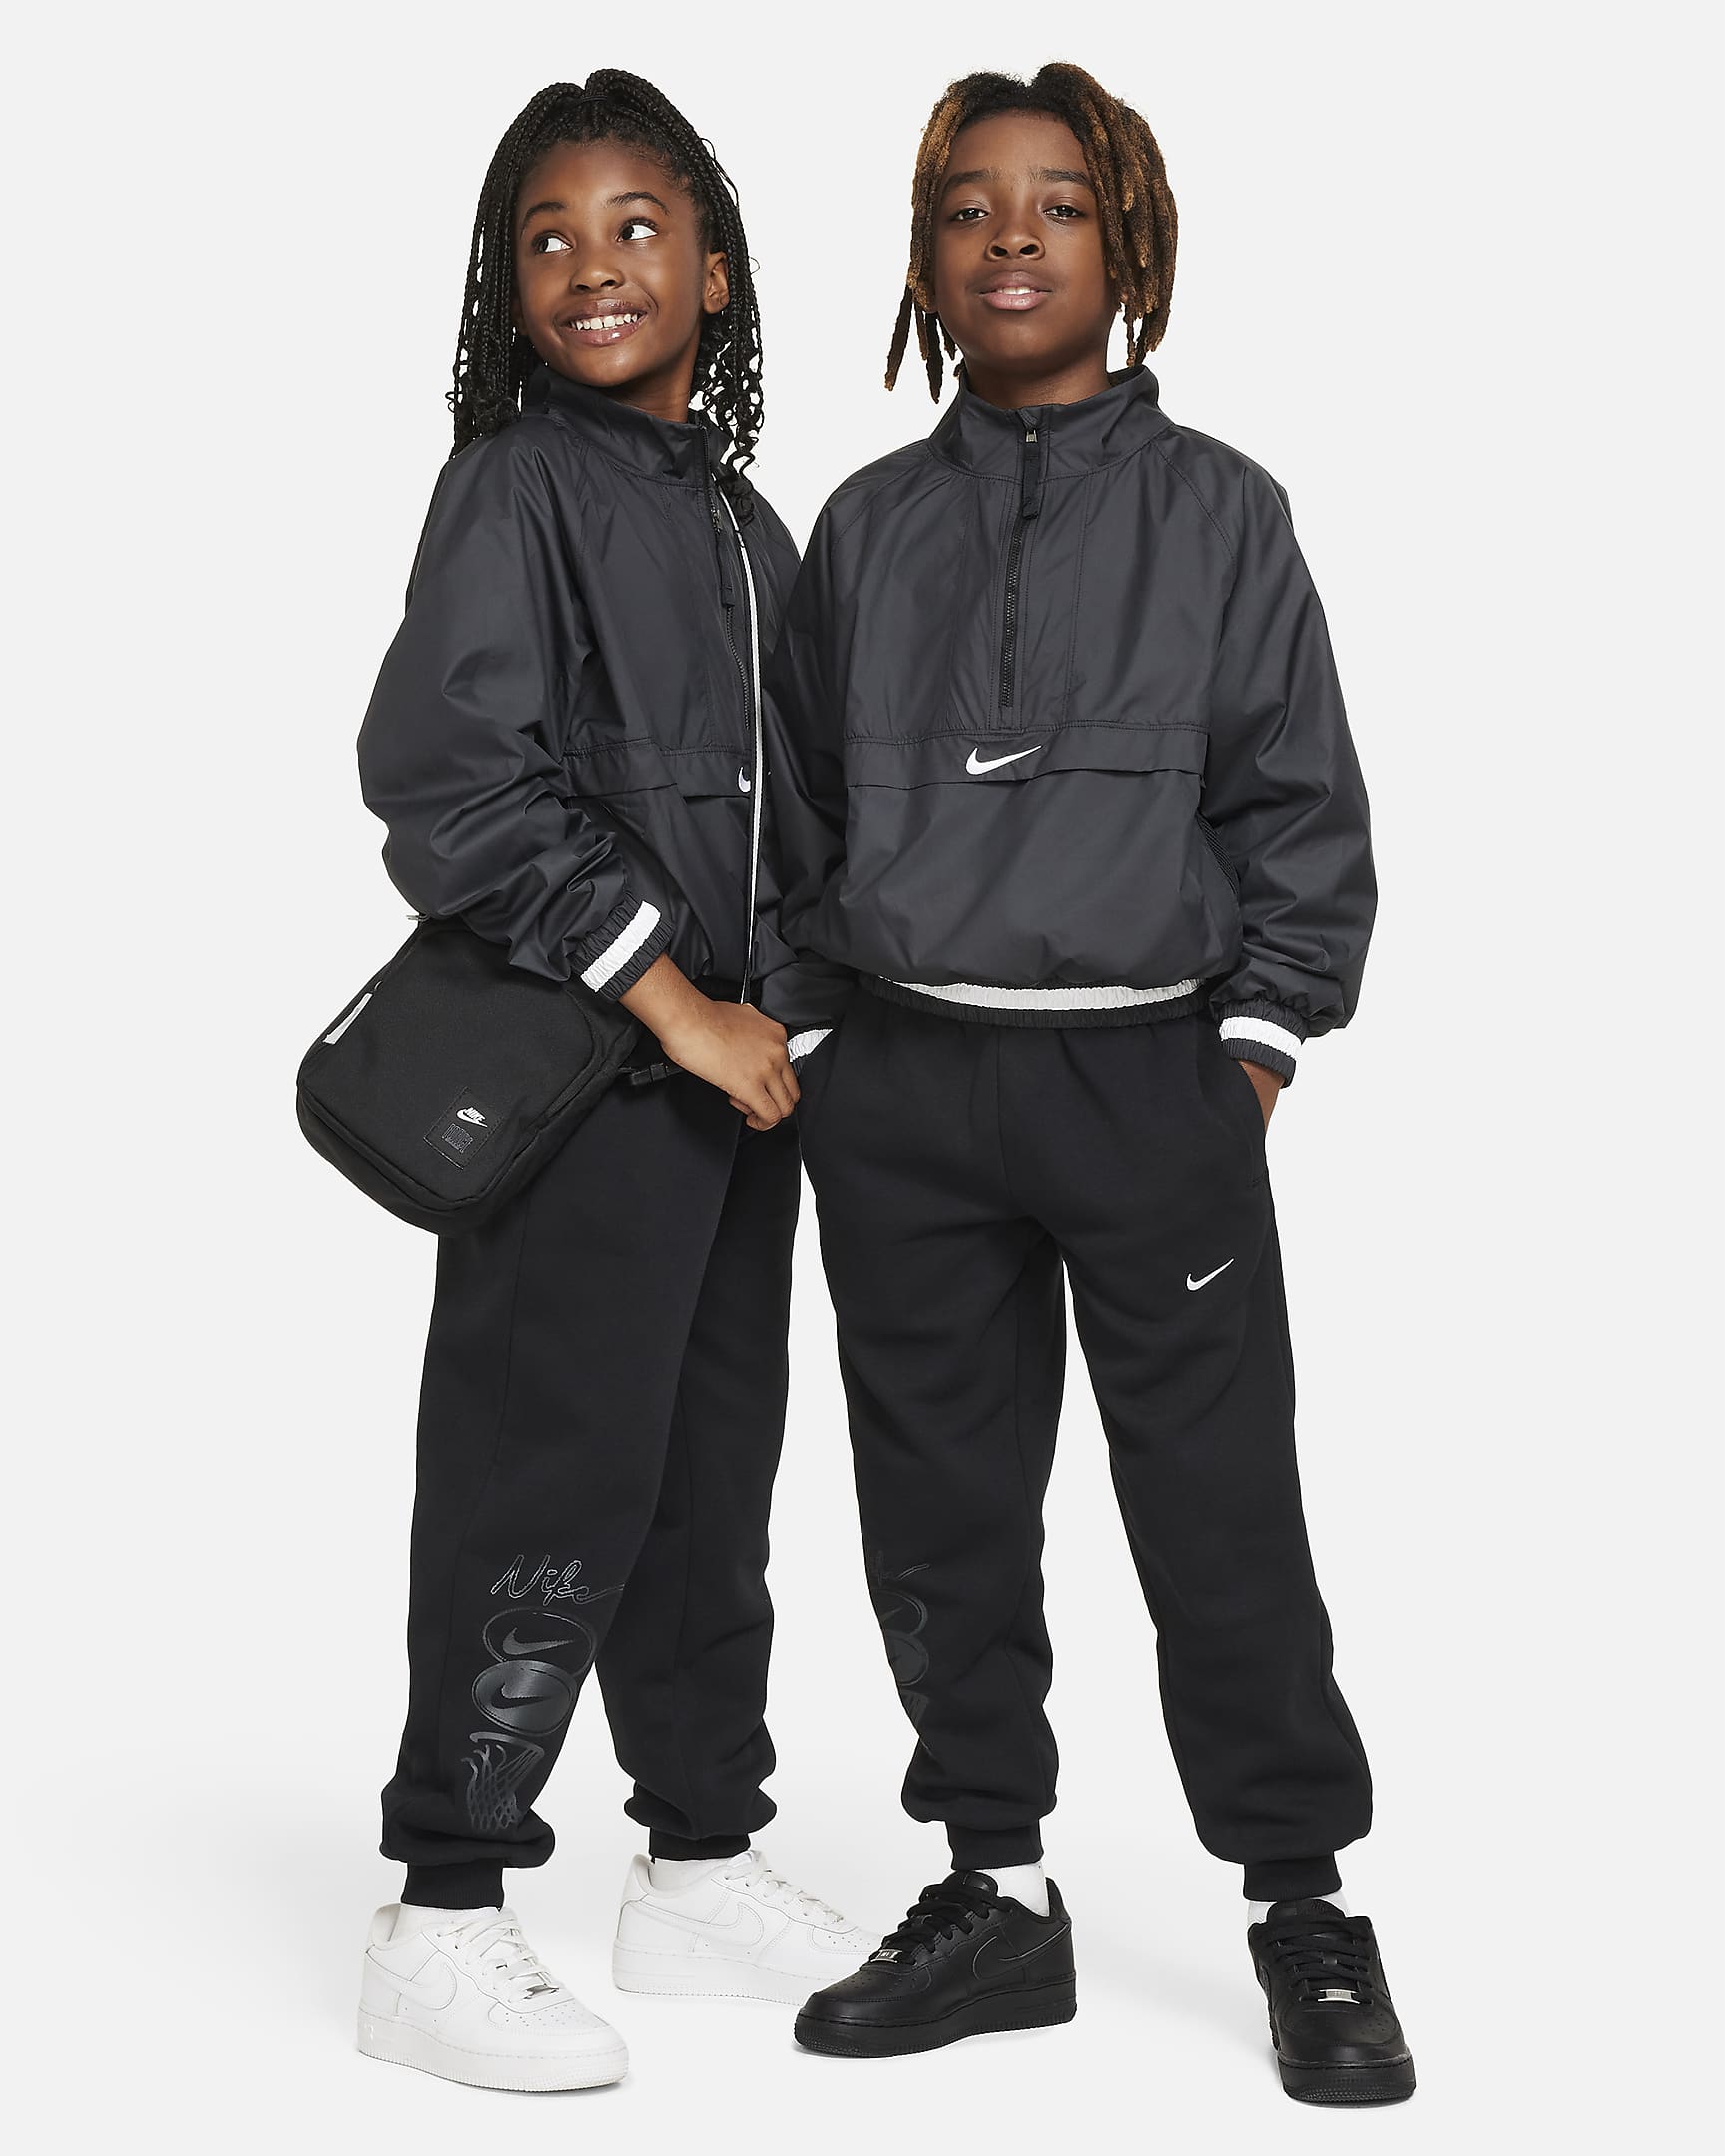 Nike Culture of Basketball Older Kids' Fleece Trousers. Nike ZA